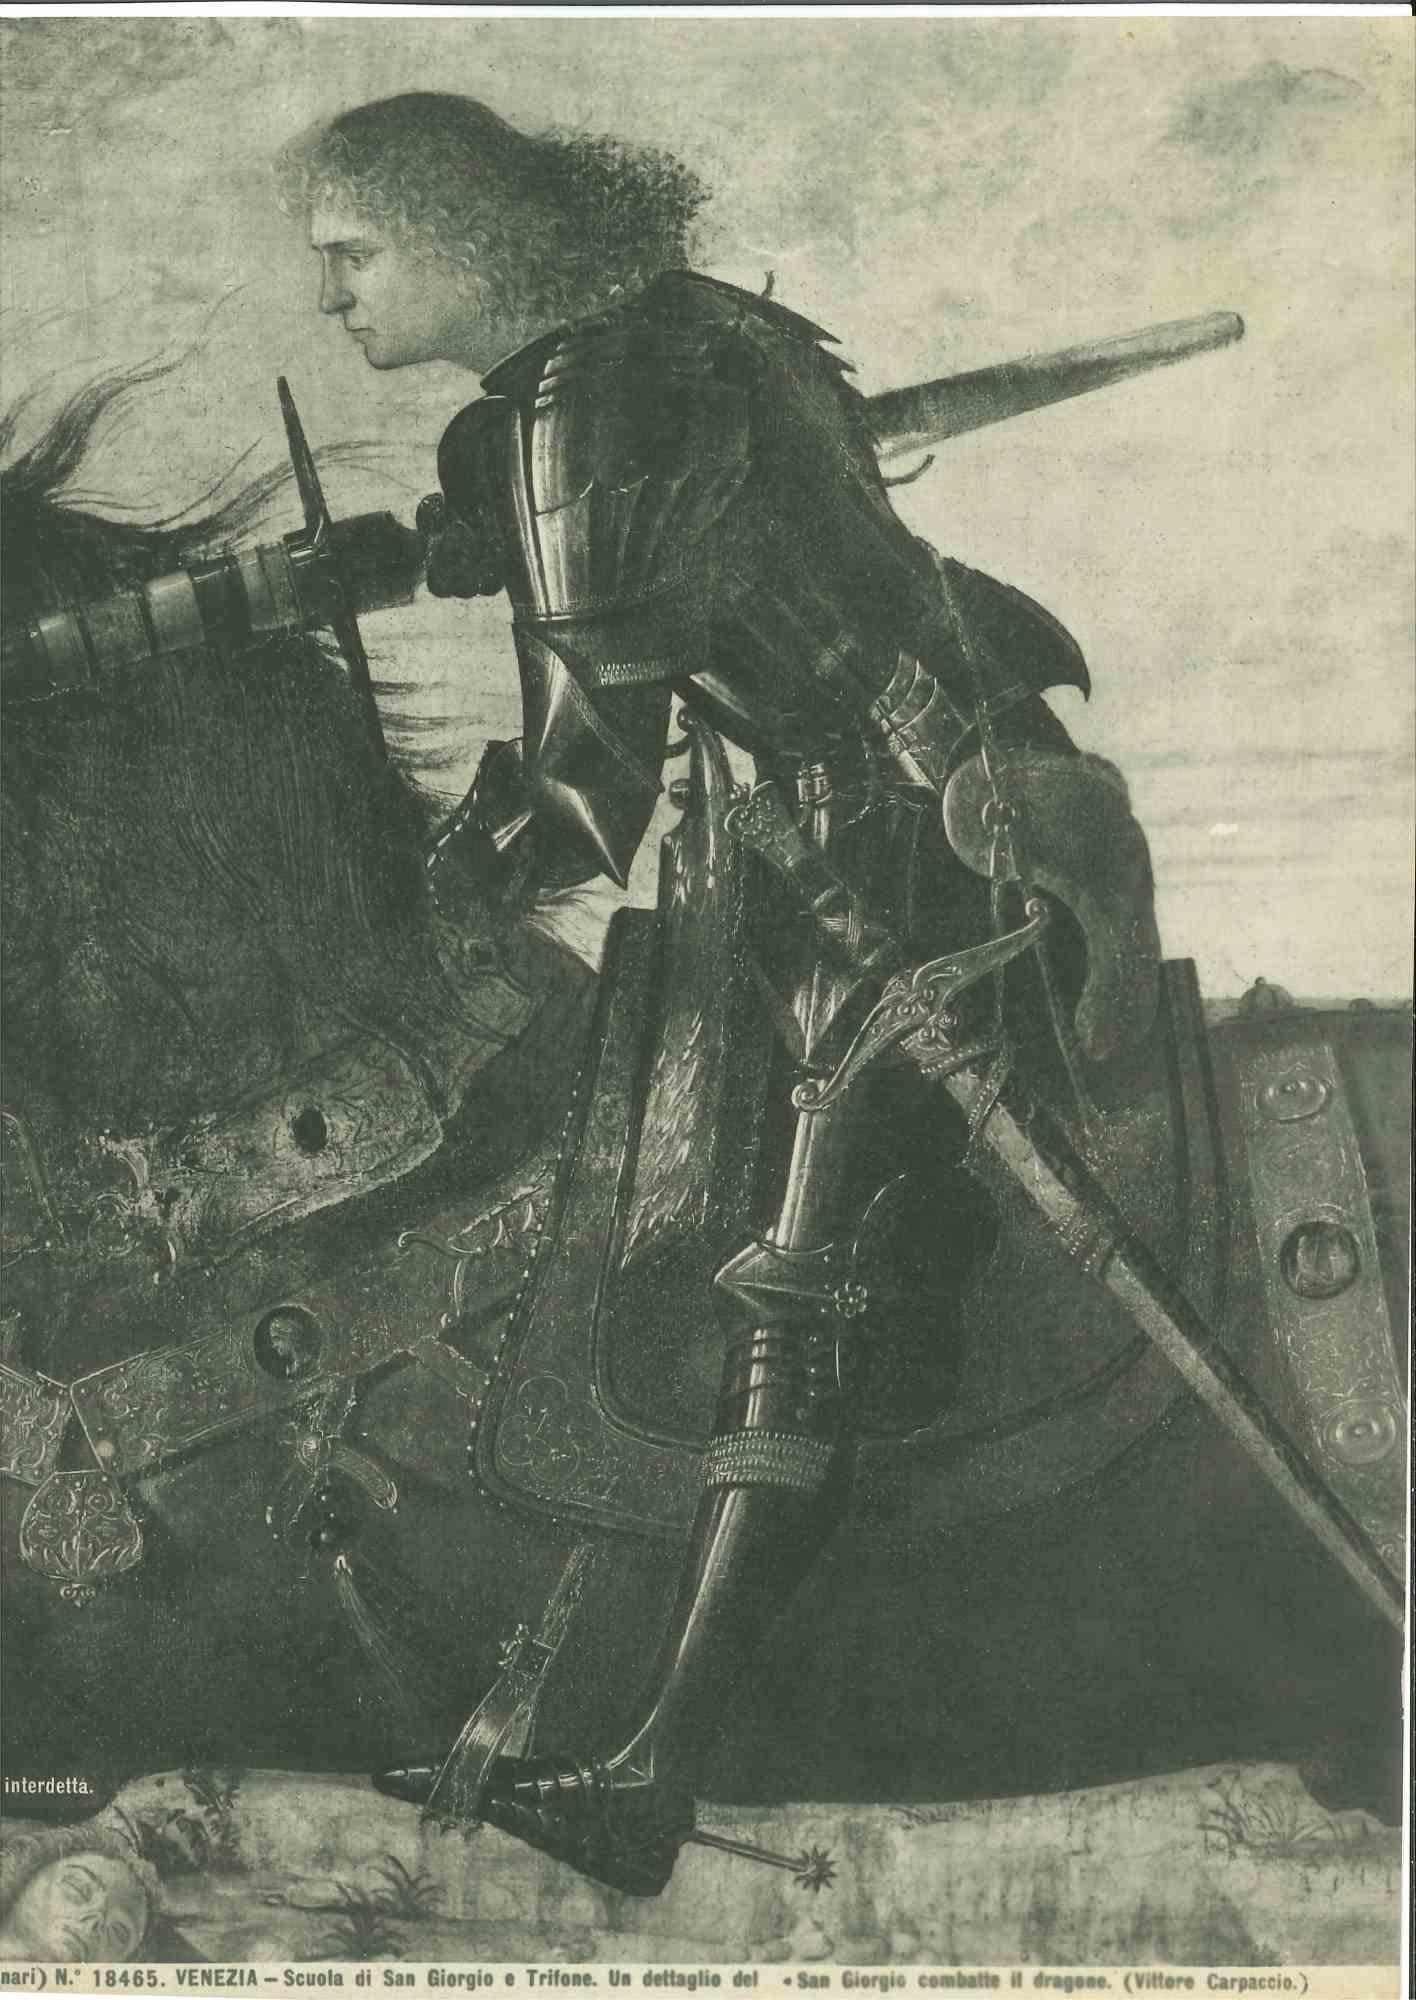 Unknown Portrait Photograph - Architecture and Art Photo - Saint George Fights the Dragon - Venice - 1920s